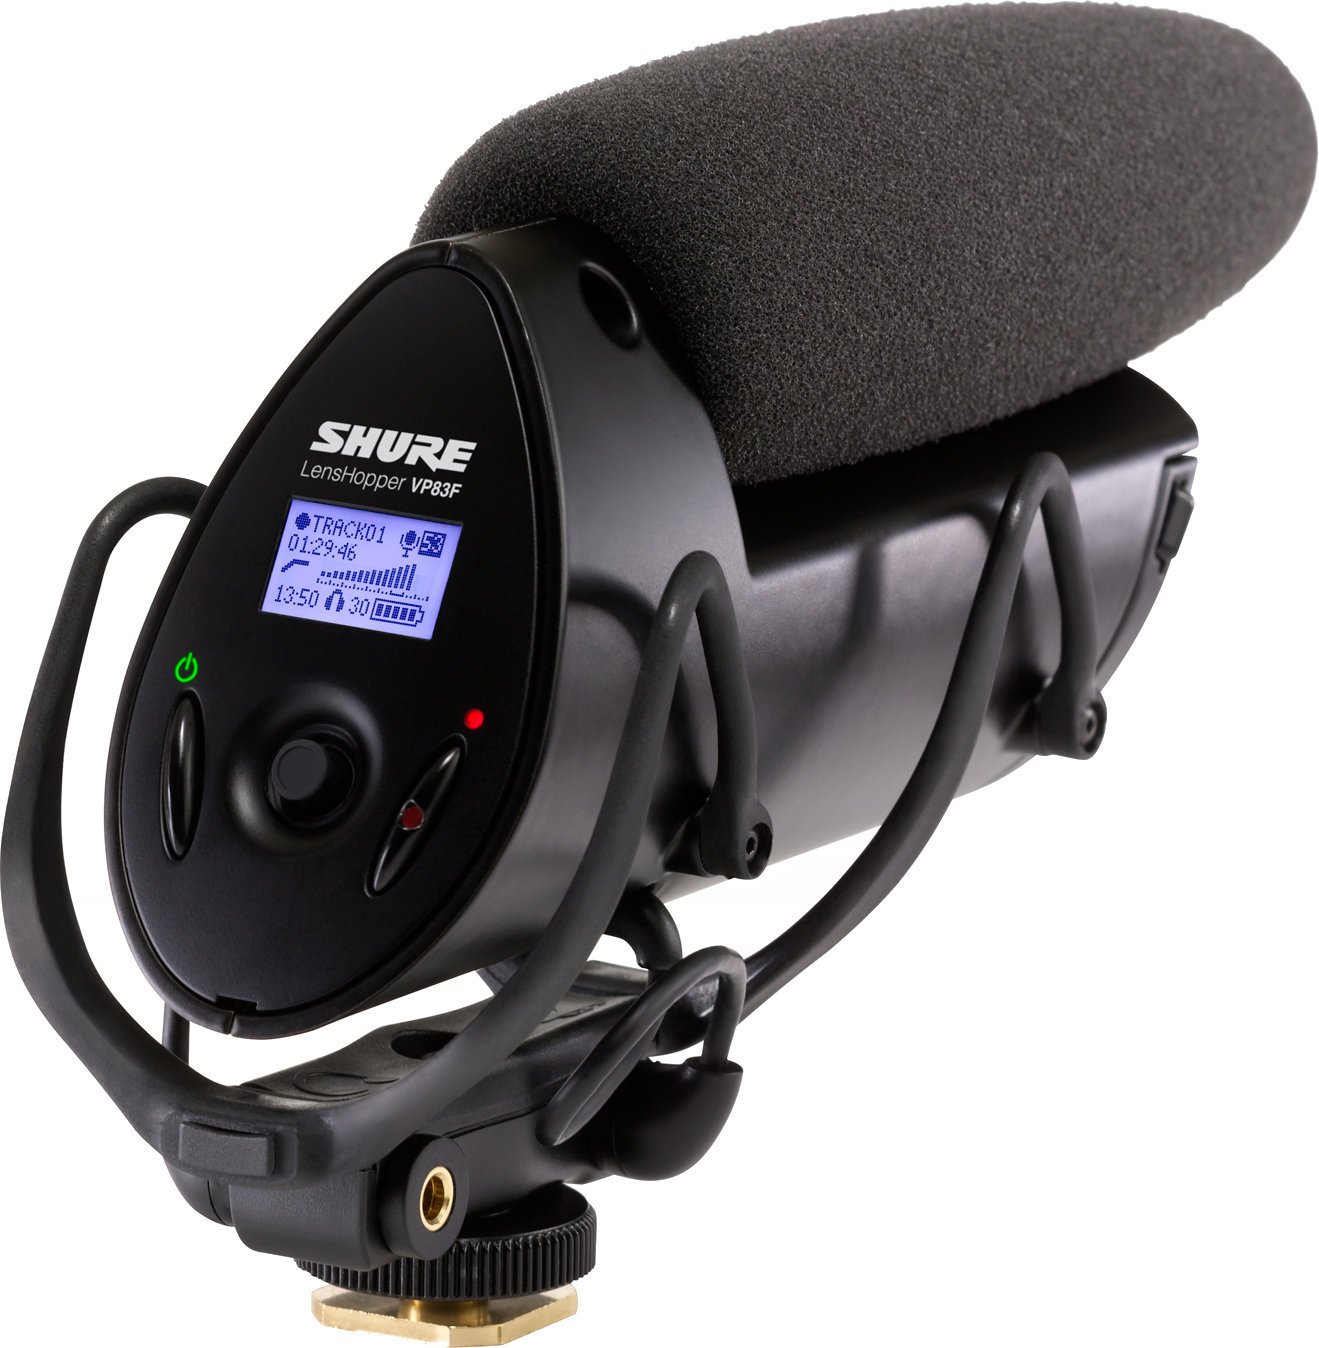 Video microphone Shure VP83F LensHopper